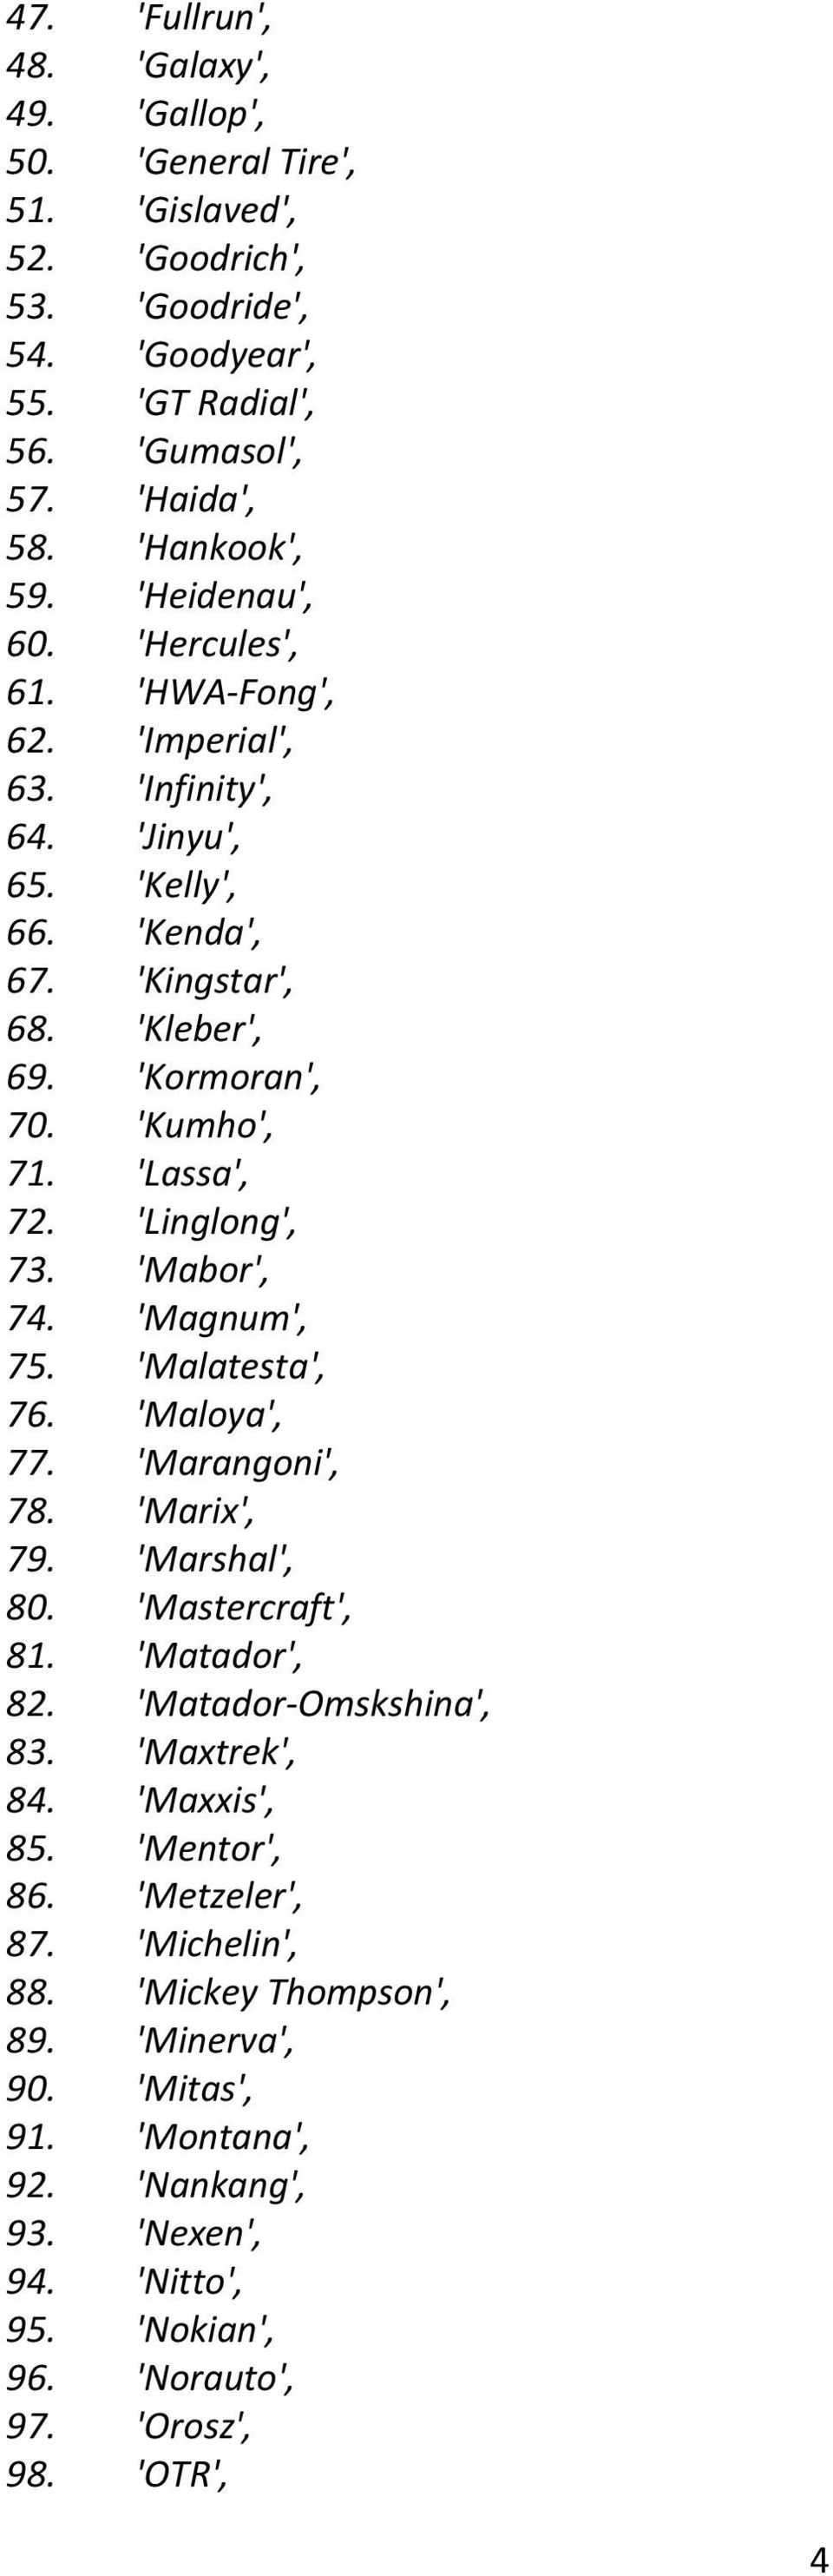 'Linglong', 73. 'Mabor', 74. 'Magnum', 75. 'Malatesta', 76. 'Maloya', 77. 'Marangoni', 78. 'Marix', 79. 'Marshal', 80. 'Mastercraft', 81. 'Matador', 82. 'Matador-Omskshina', 83. 'Maxtrek', 84.